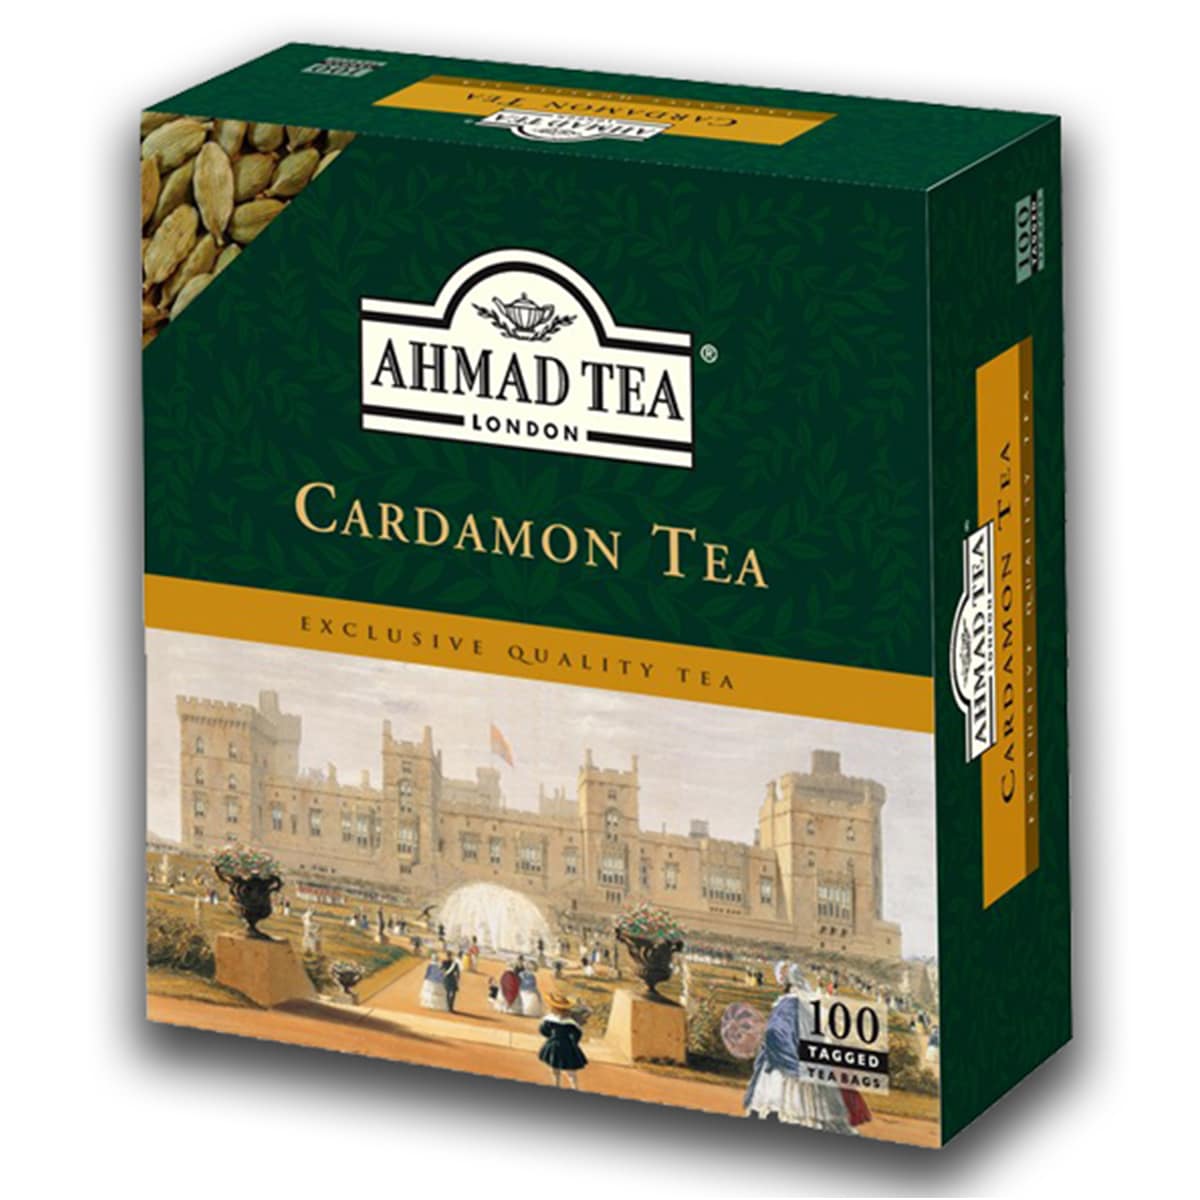 Buy Ahmad Tea London Cardamon Tea (100 Tagged Teabags) - 500 gm